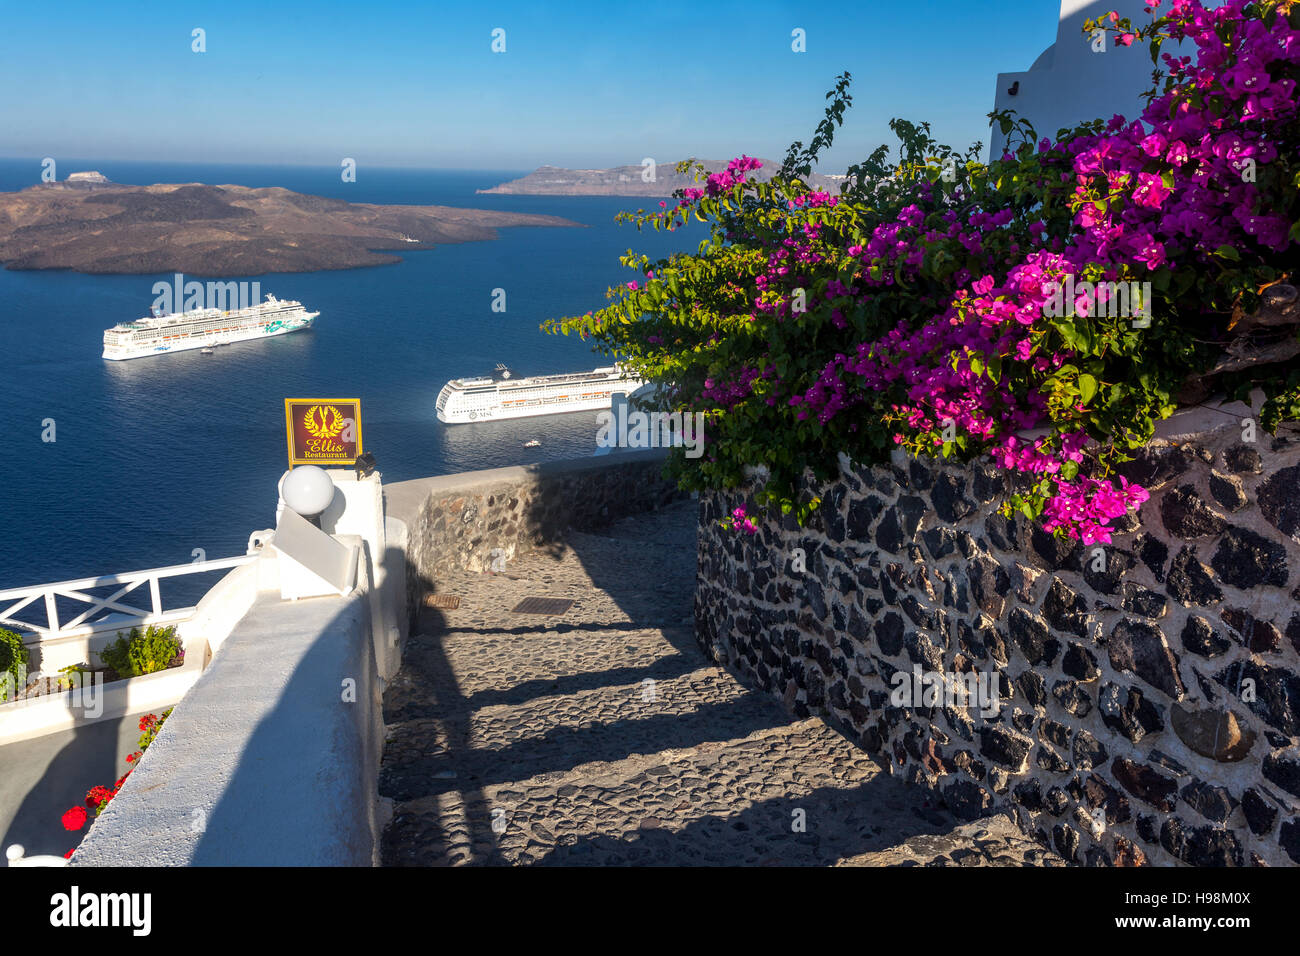 Cruises moored in the caldera, Santorini, Aegean Sea, Cyclades Islands, Greece Stock Photo